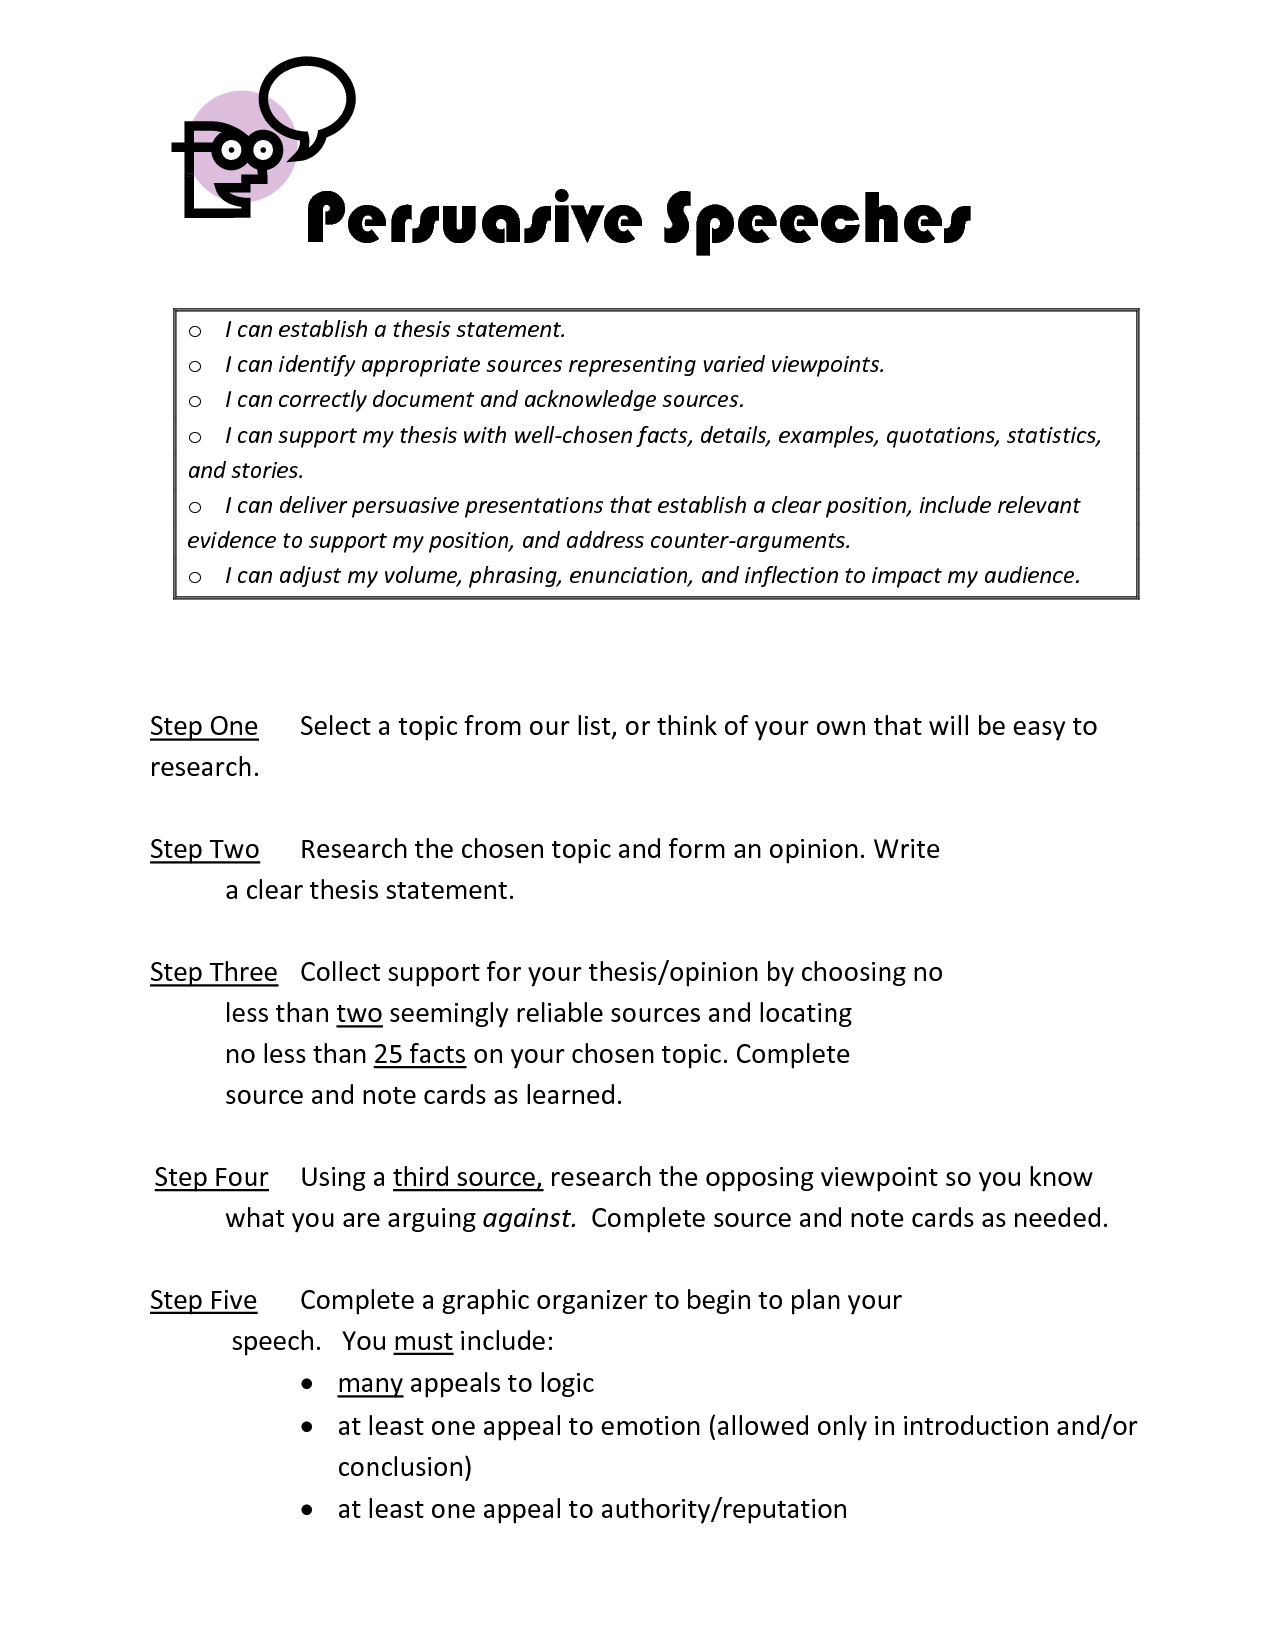 Persuasive outline format